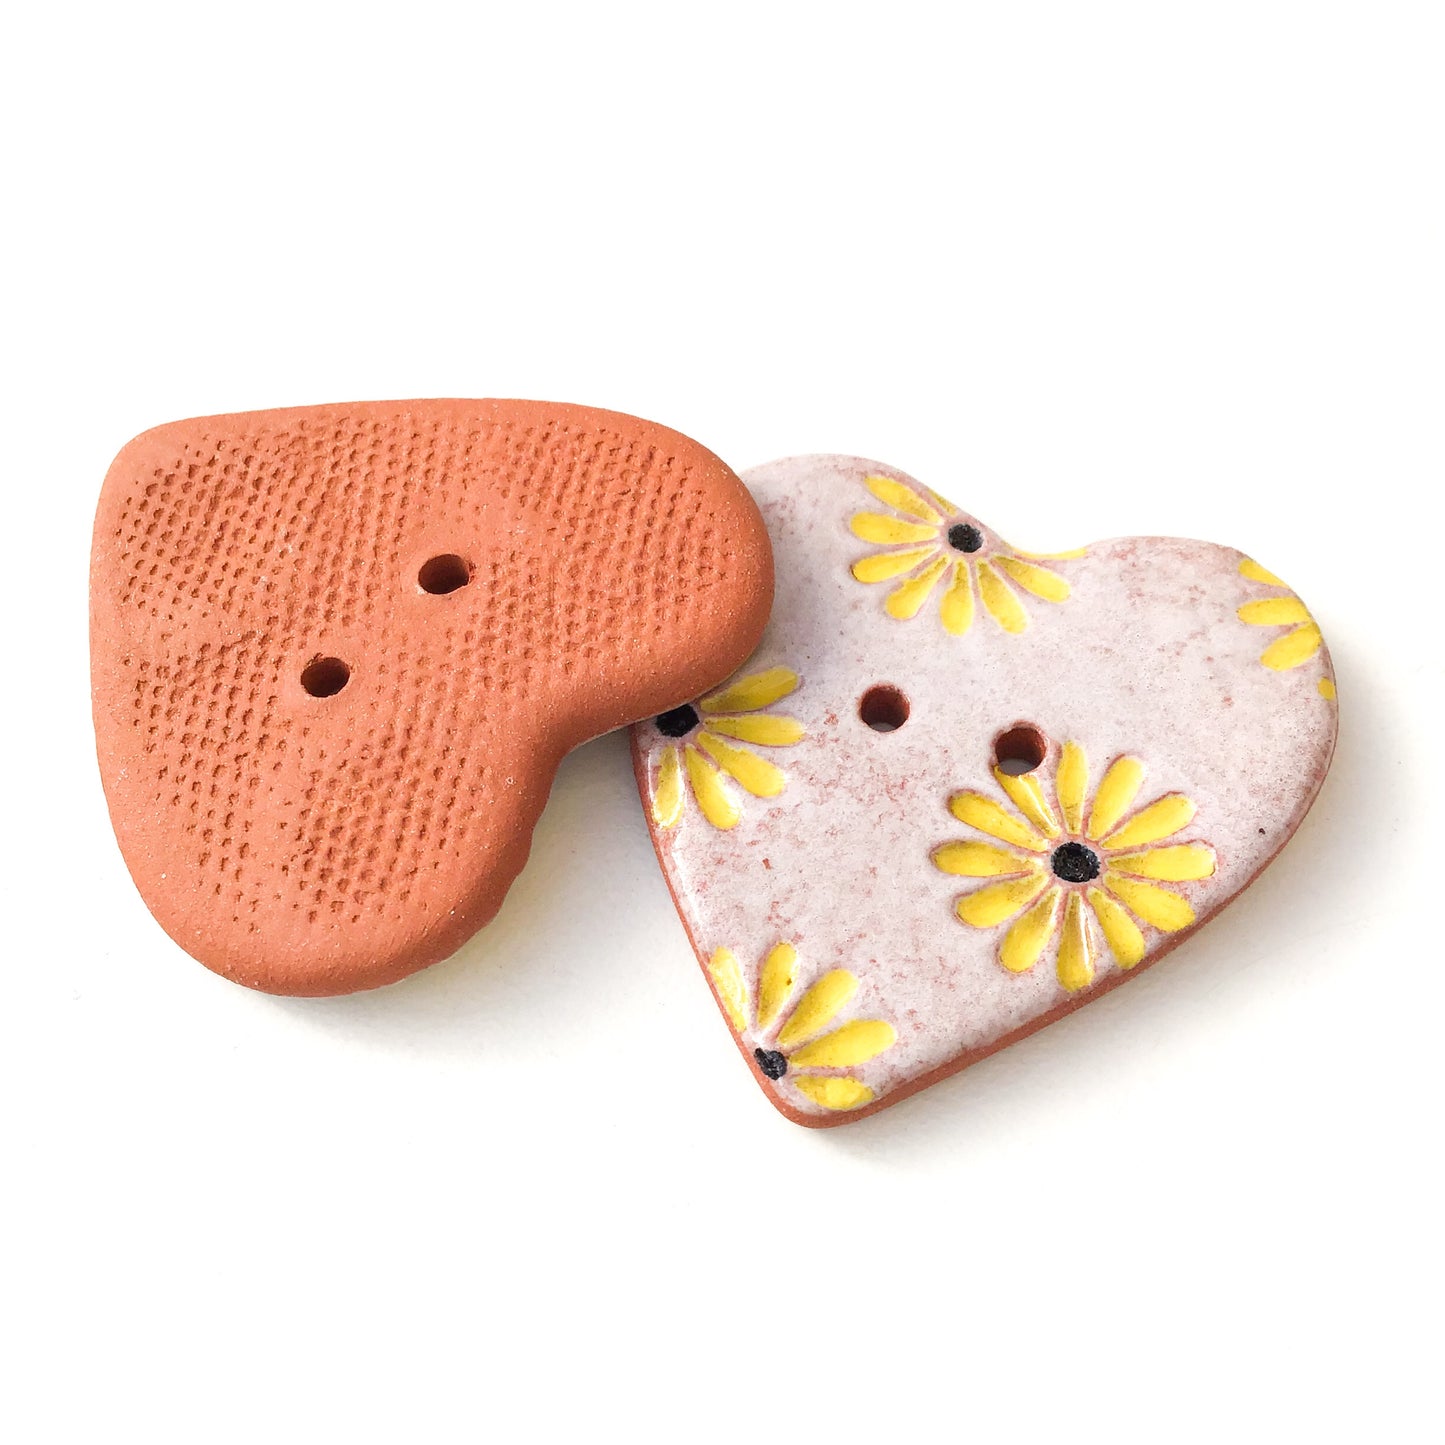 Decorative Heart Buttons - Ceramic Heart Button - Yellow Daisies - 1 3/8"